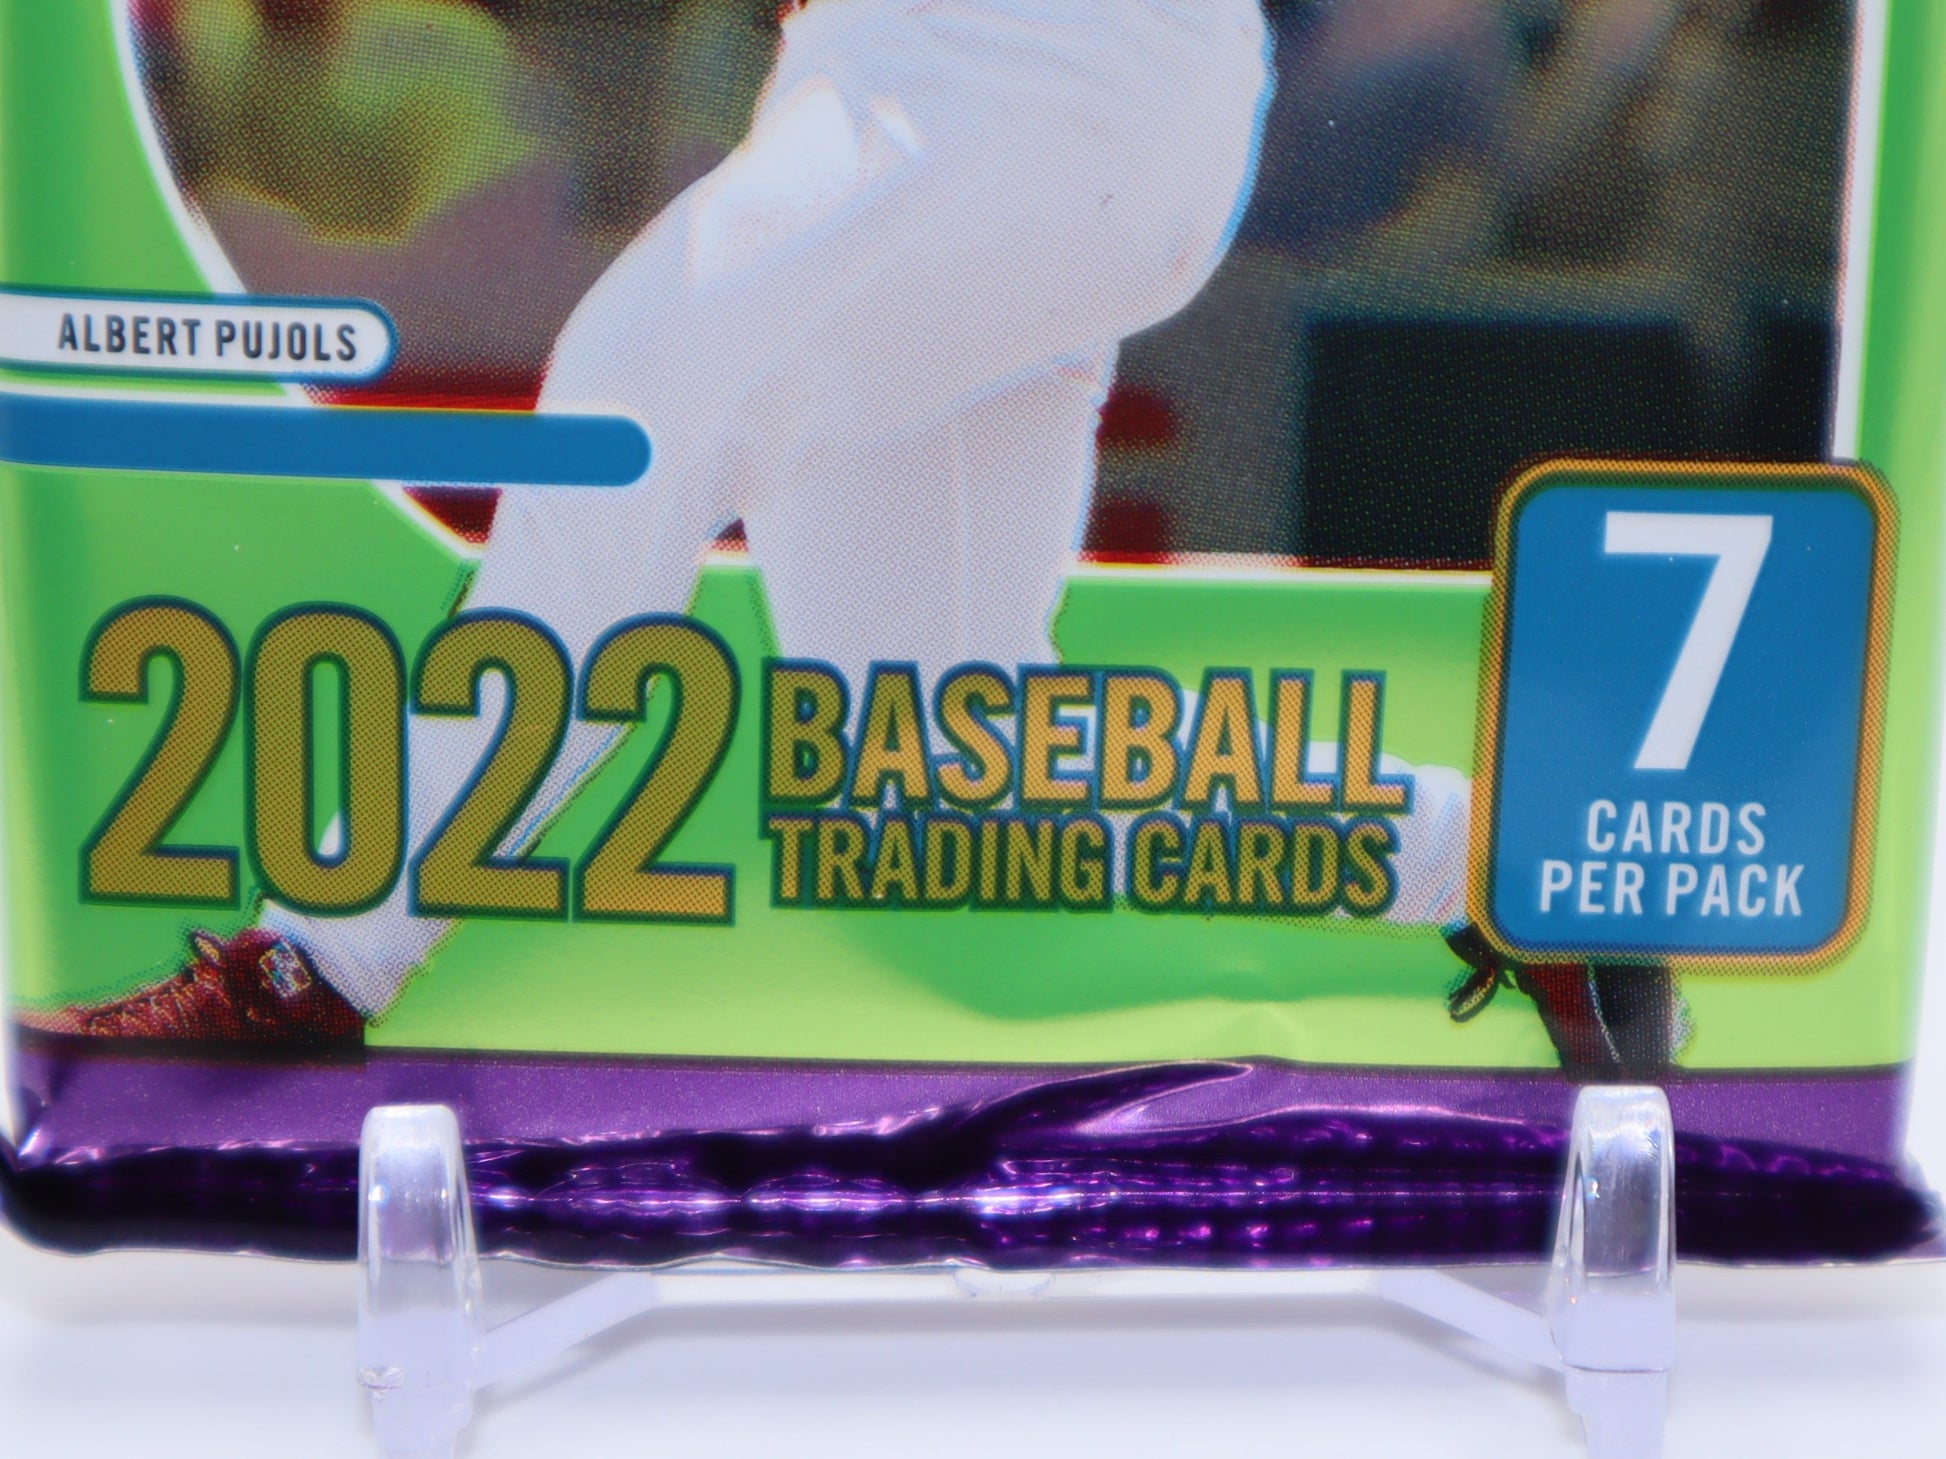 2022 Panini Absolute Baseball Cards Blaster Box Wax Pack - Collectibles